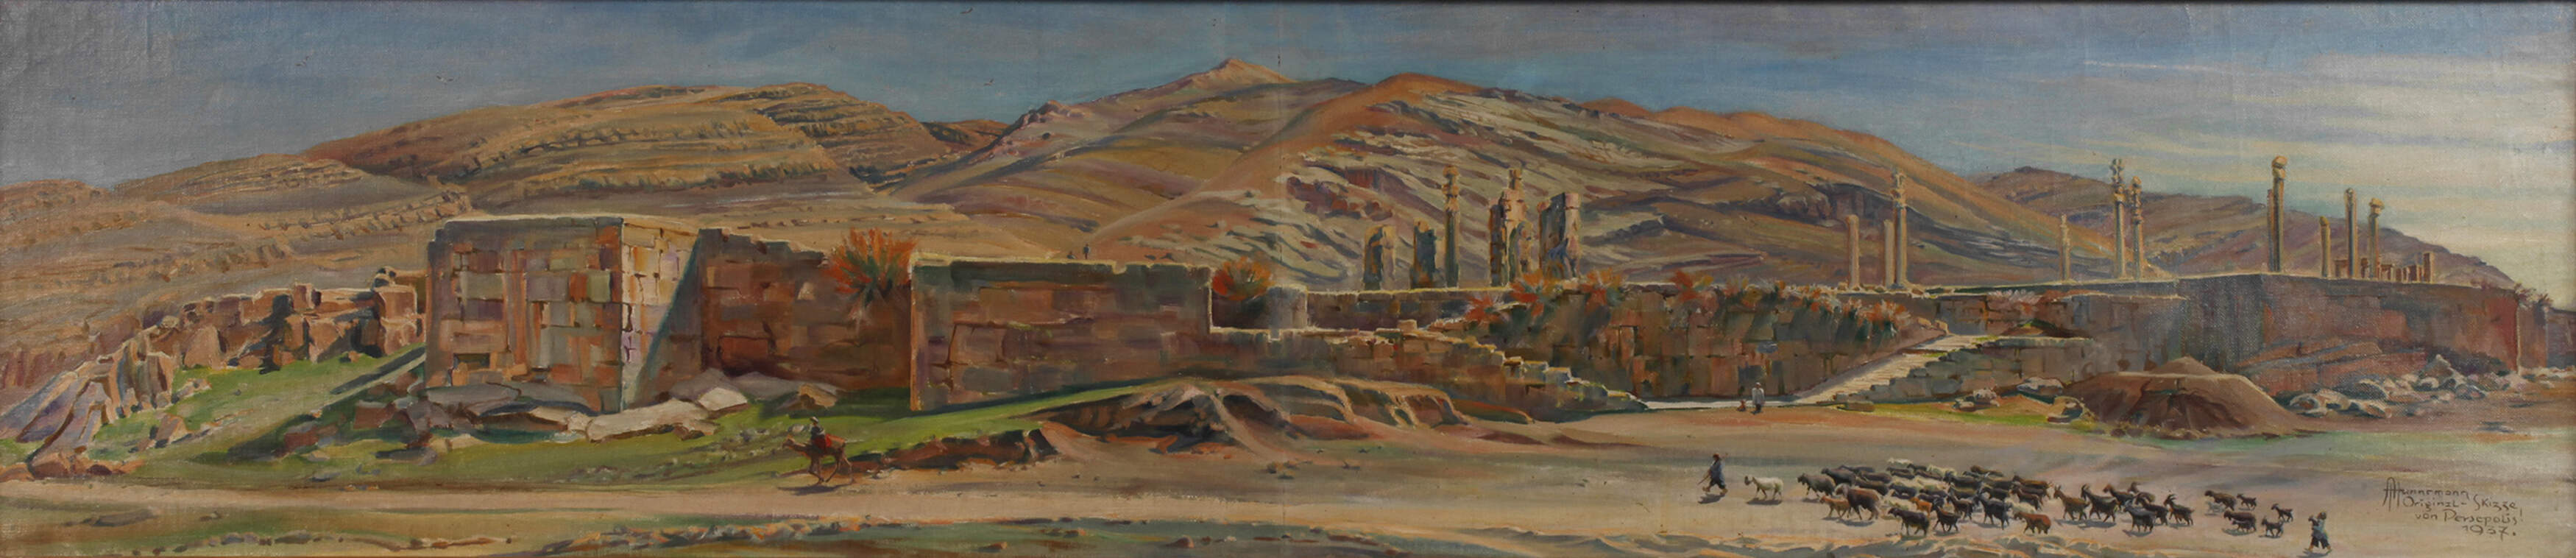 Albert Hunnemann, Panorama von Persepolis